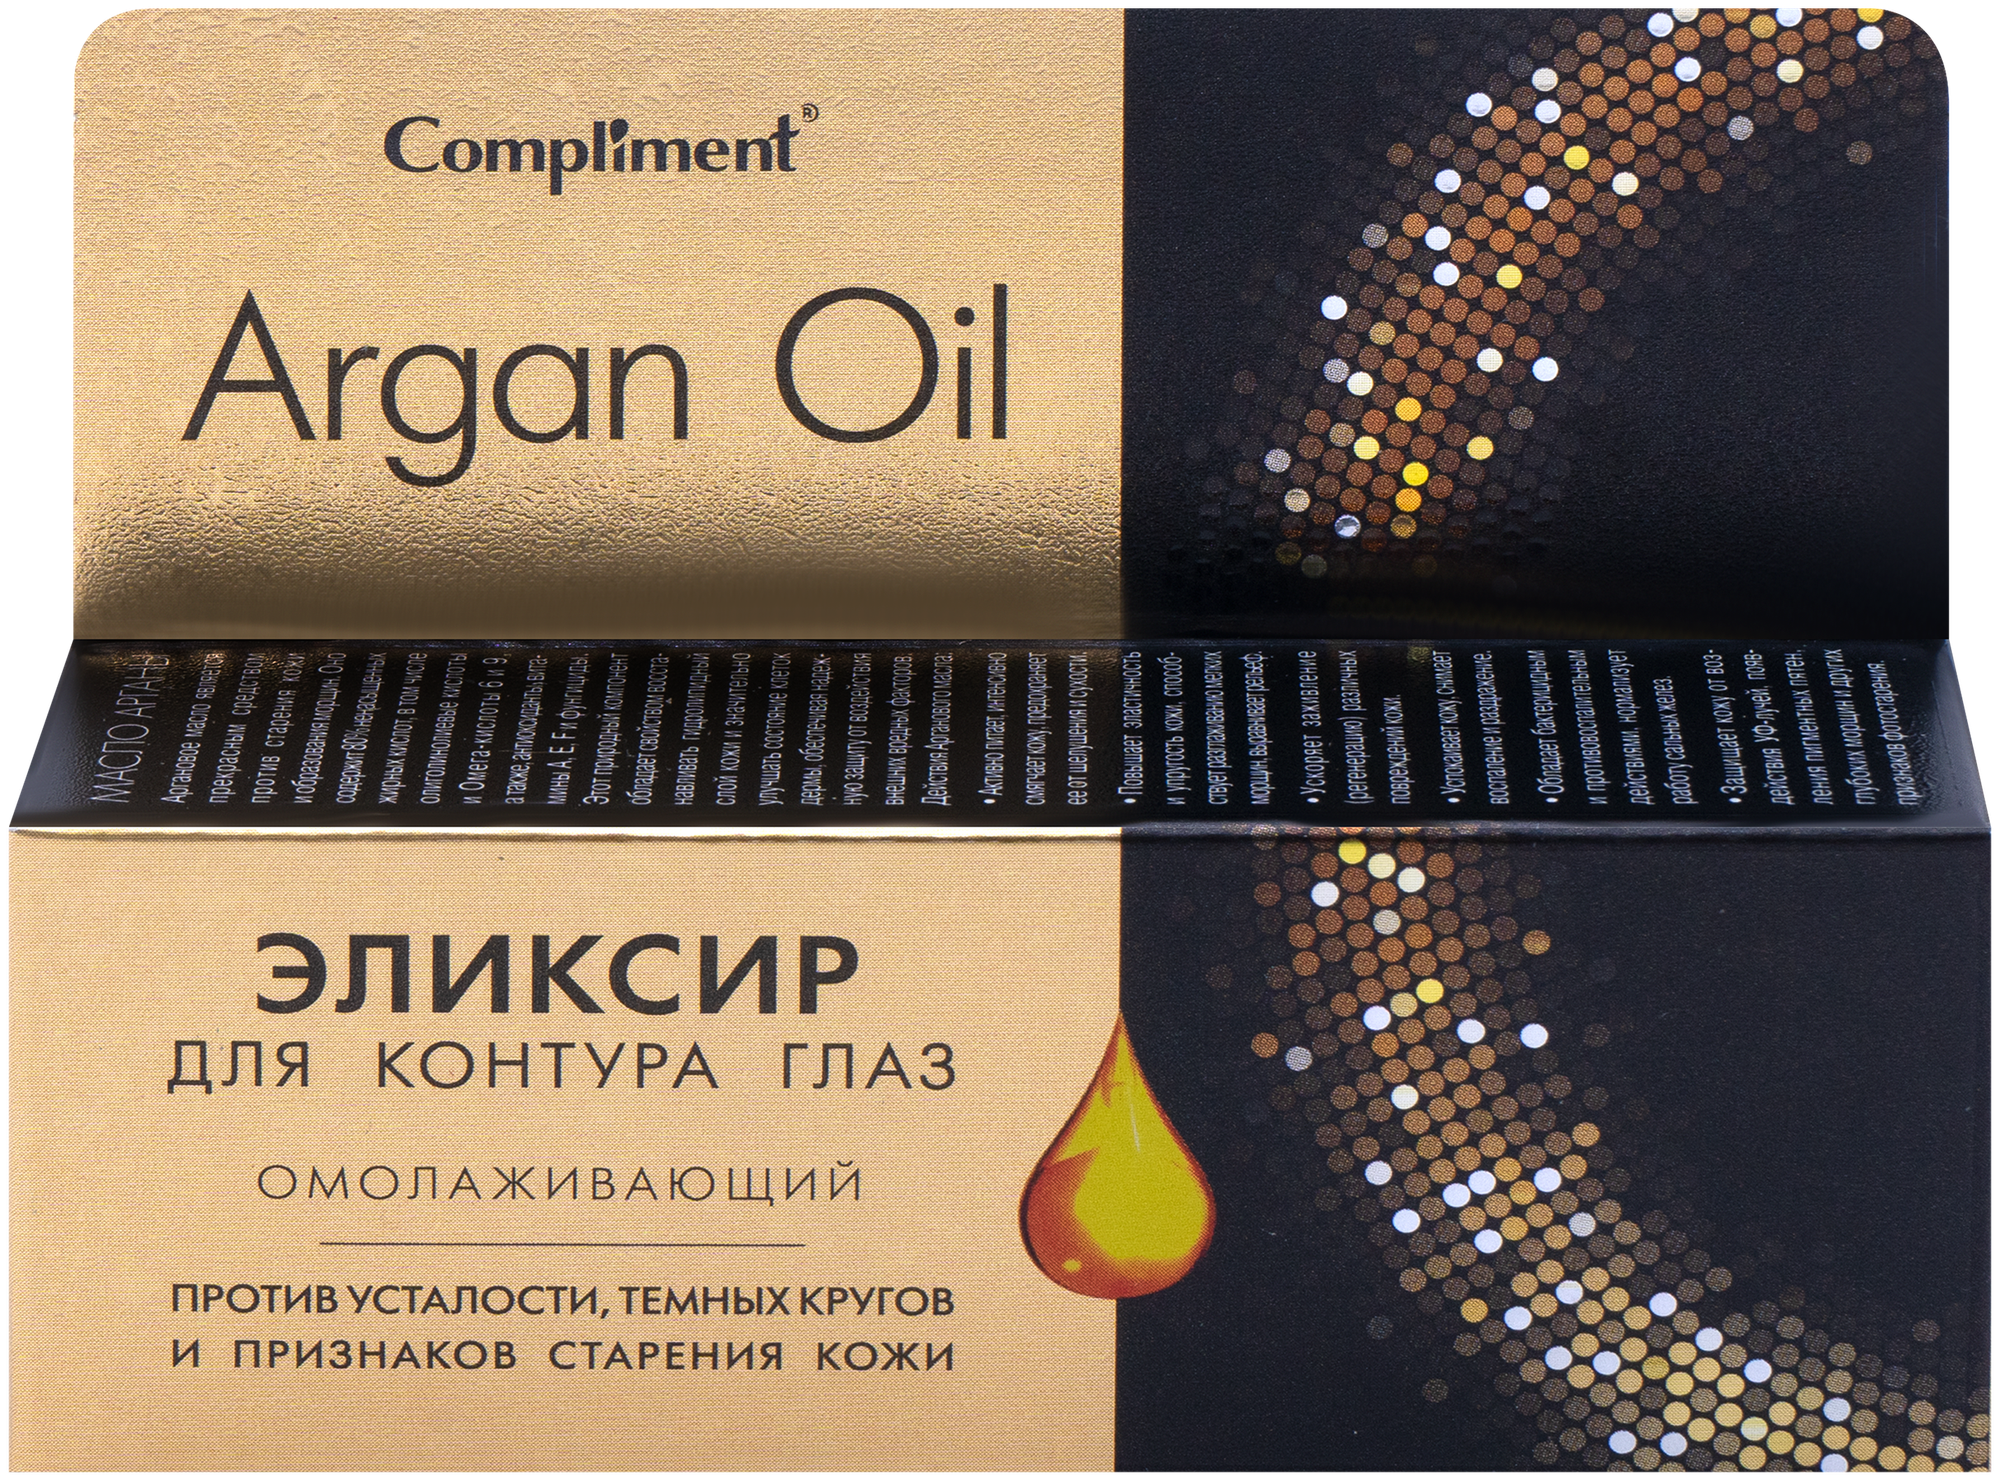 Эликсир для контура глаз COMPLIMENT Argan oil омолаживающий, 25мл